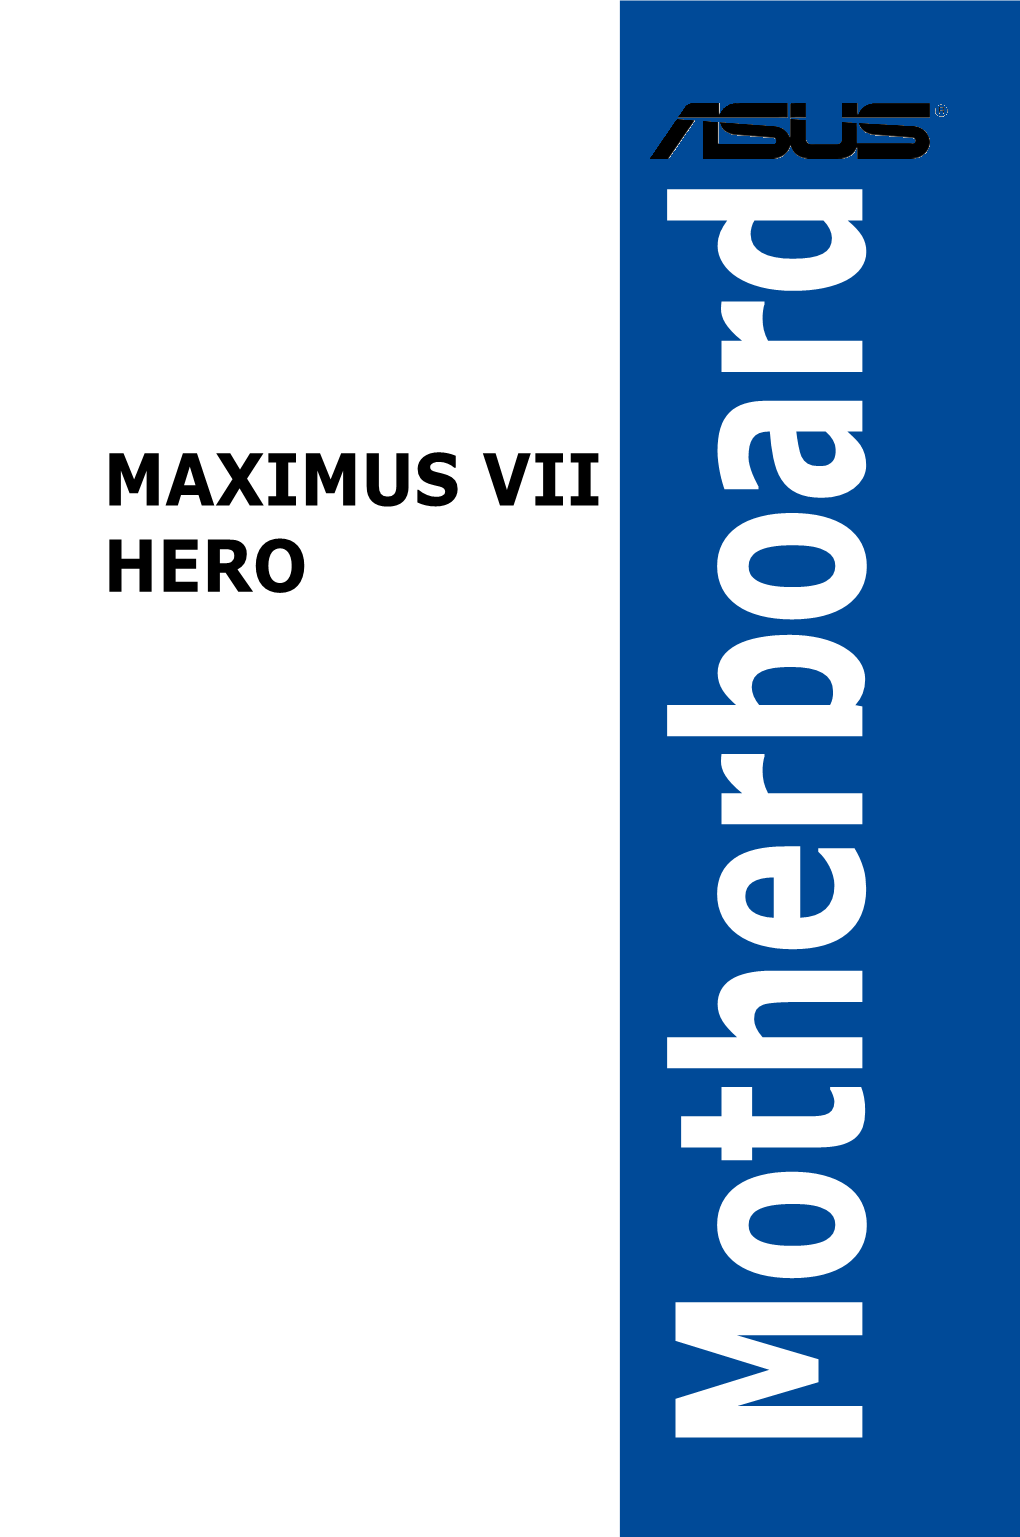 MAXIMUS VII HERO Specifications Summary